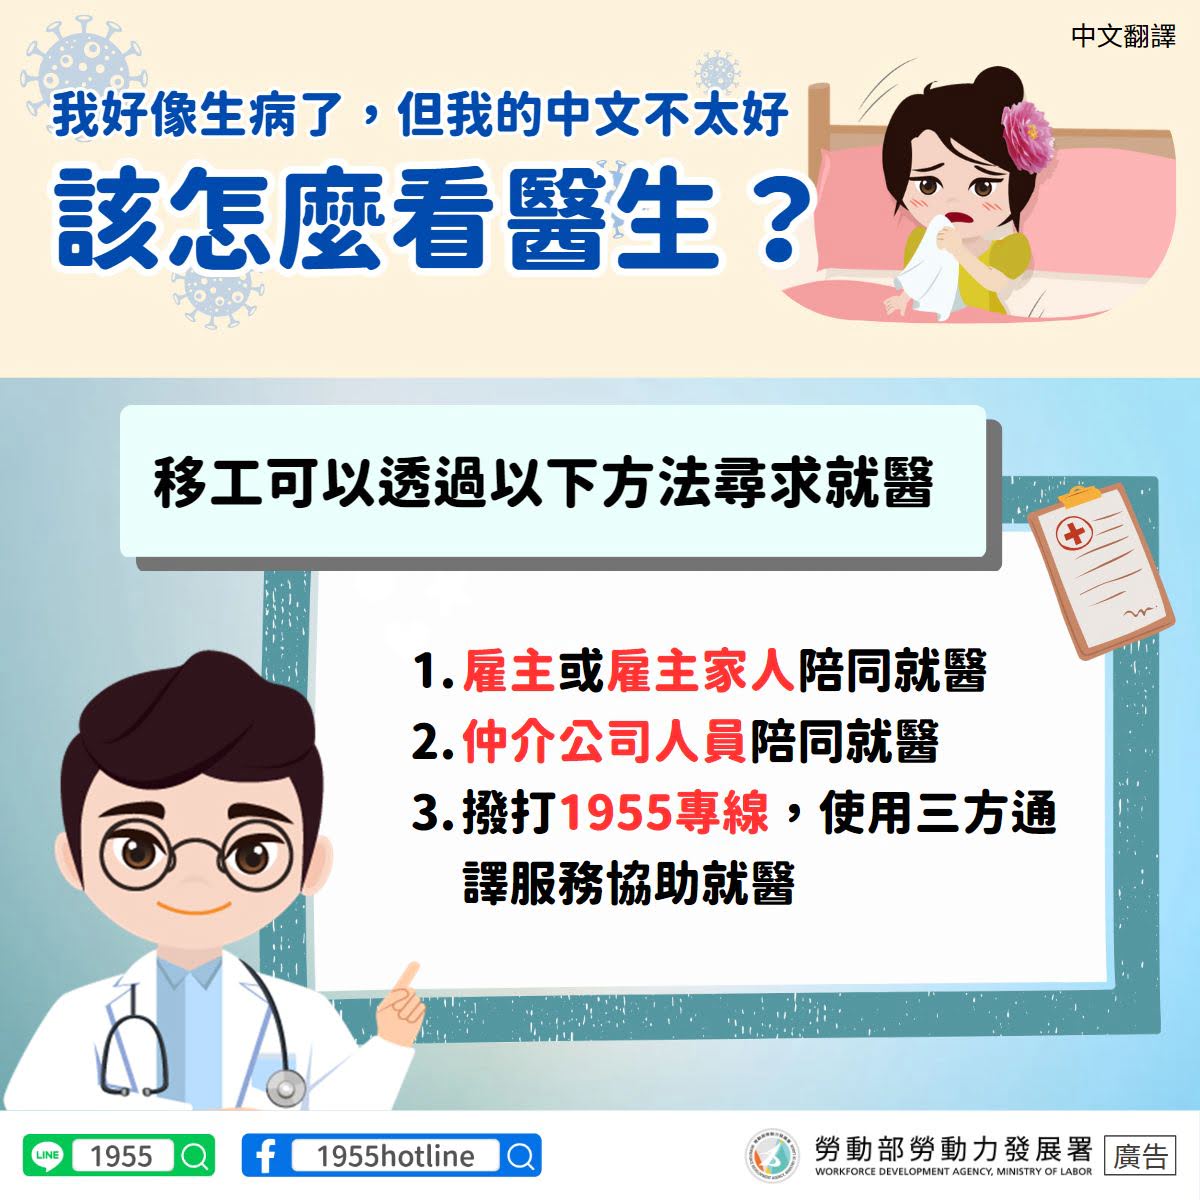 LINE@移點通-我好像生病了，但我的中文不太好該怎麼看醫生？【移工就醫協助】-多國語言版